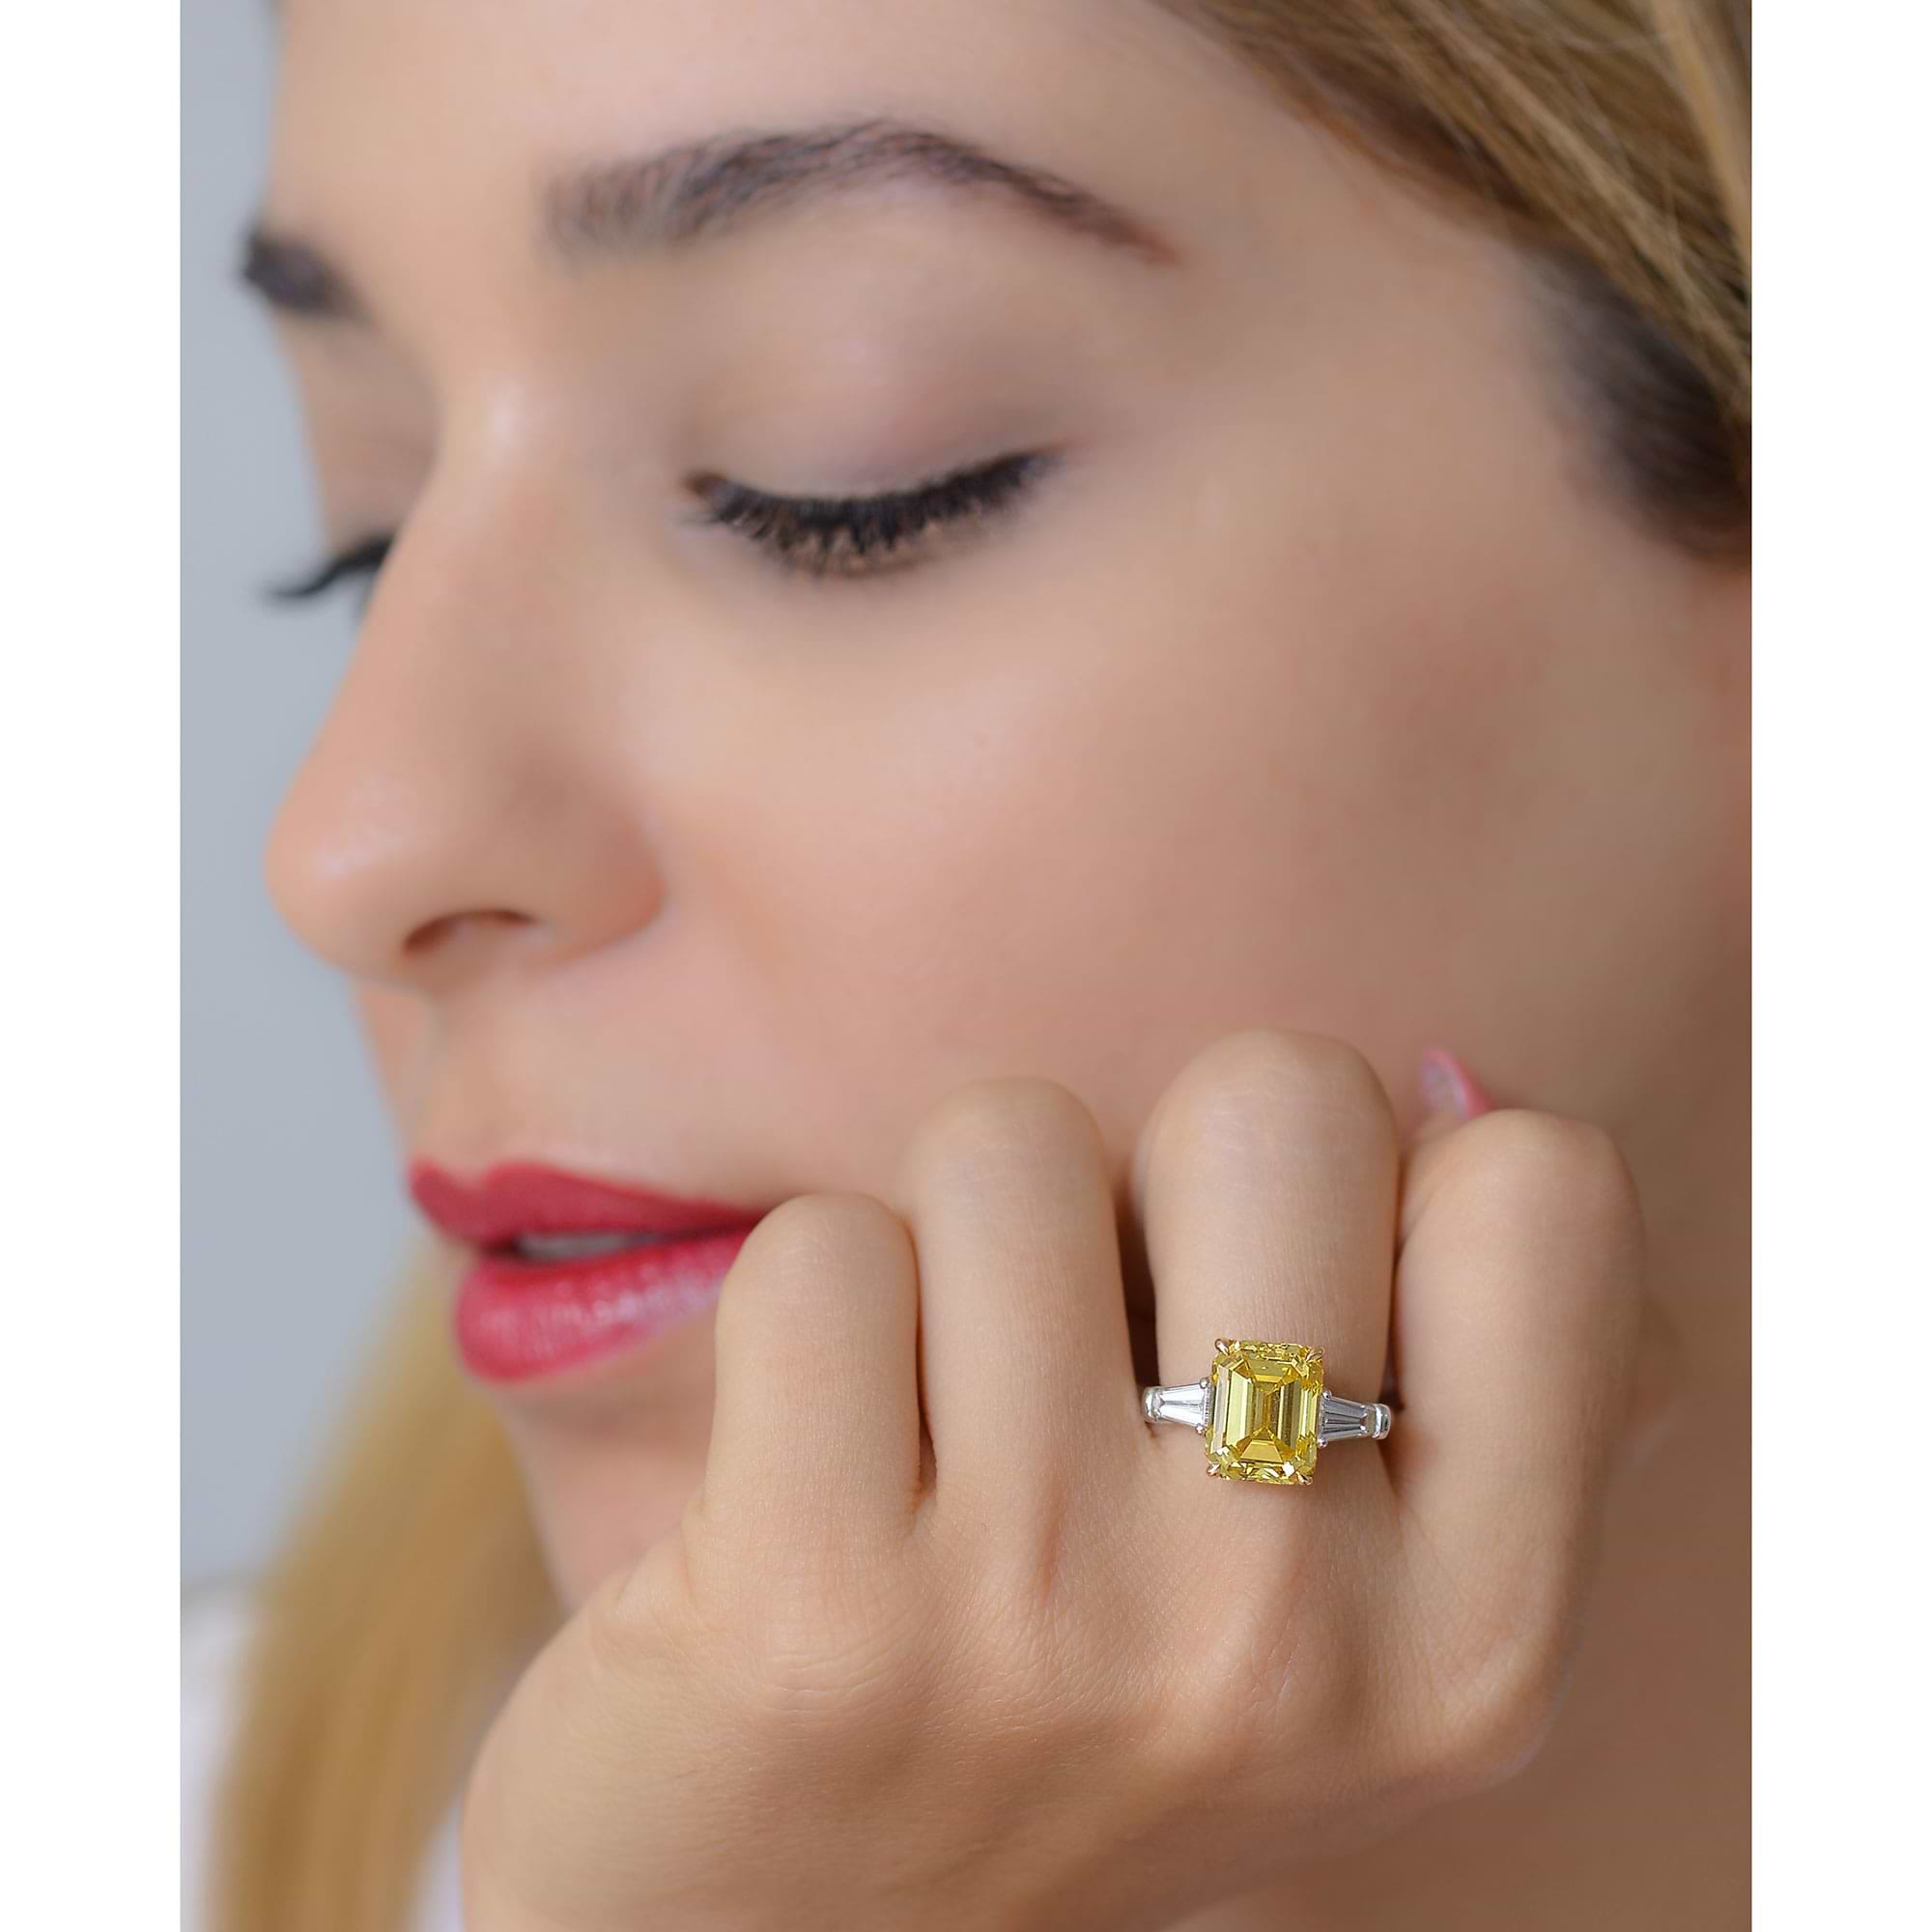 The LEIBISH 5.91 ct Fancy Vivid Yellow Emerald cut diamond ring